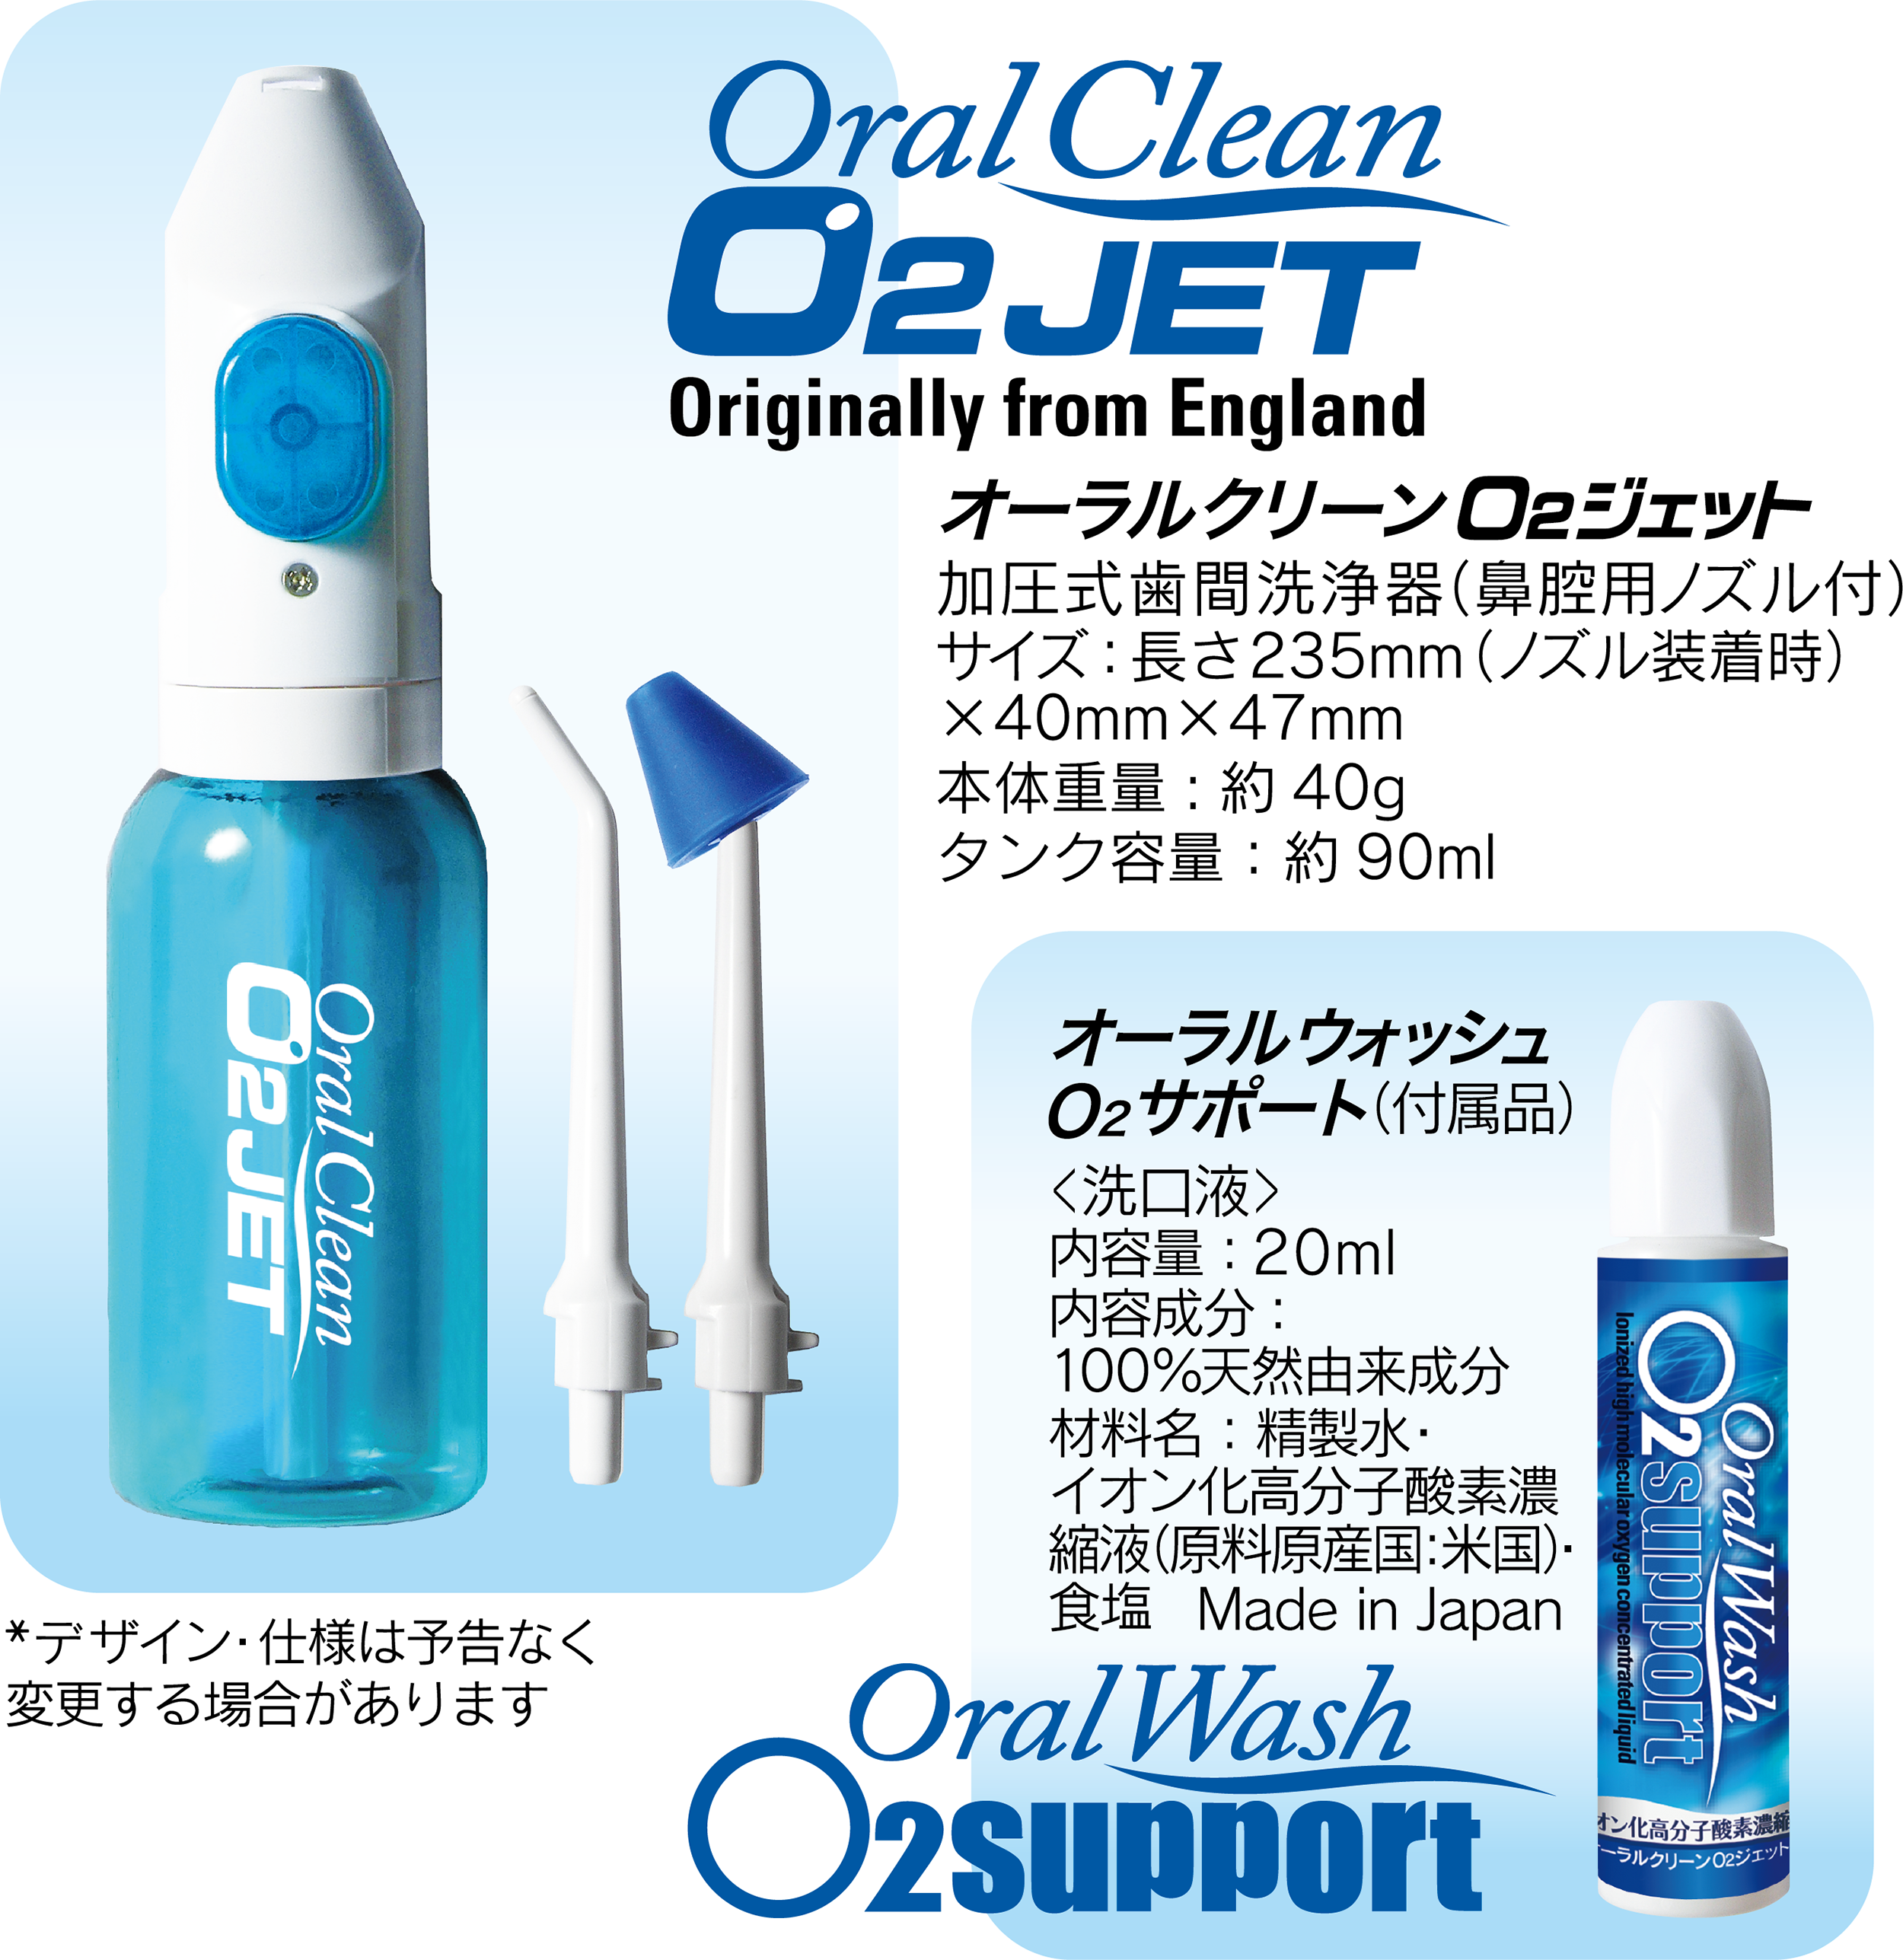  oral_clean 06